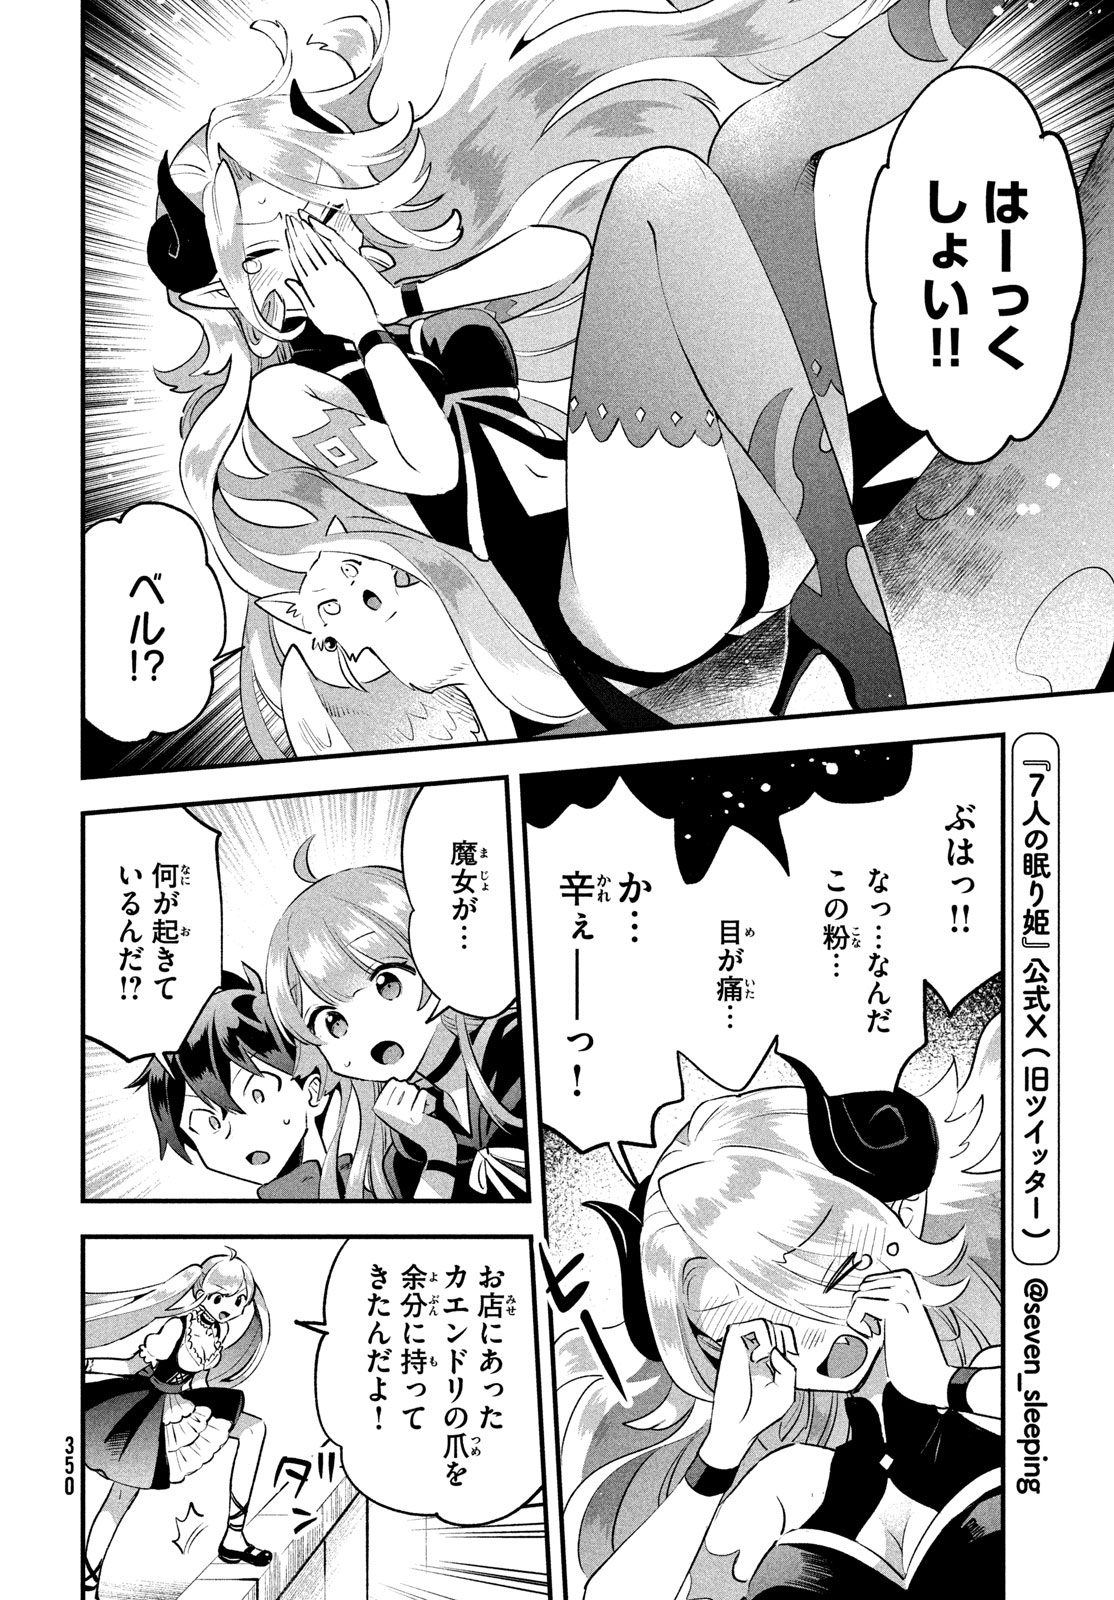 7-nin no Nemuri Hime - Chapter 44 - Page 10